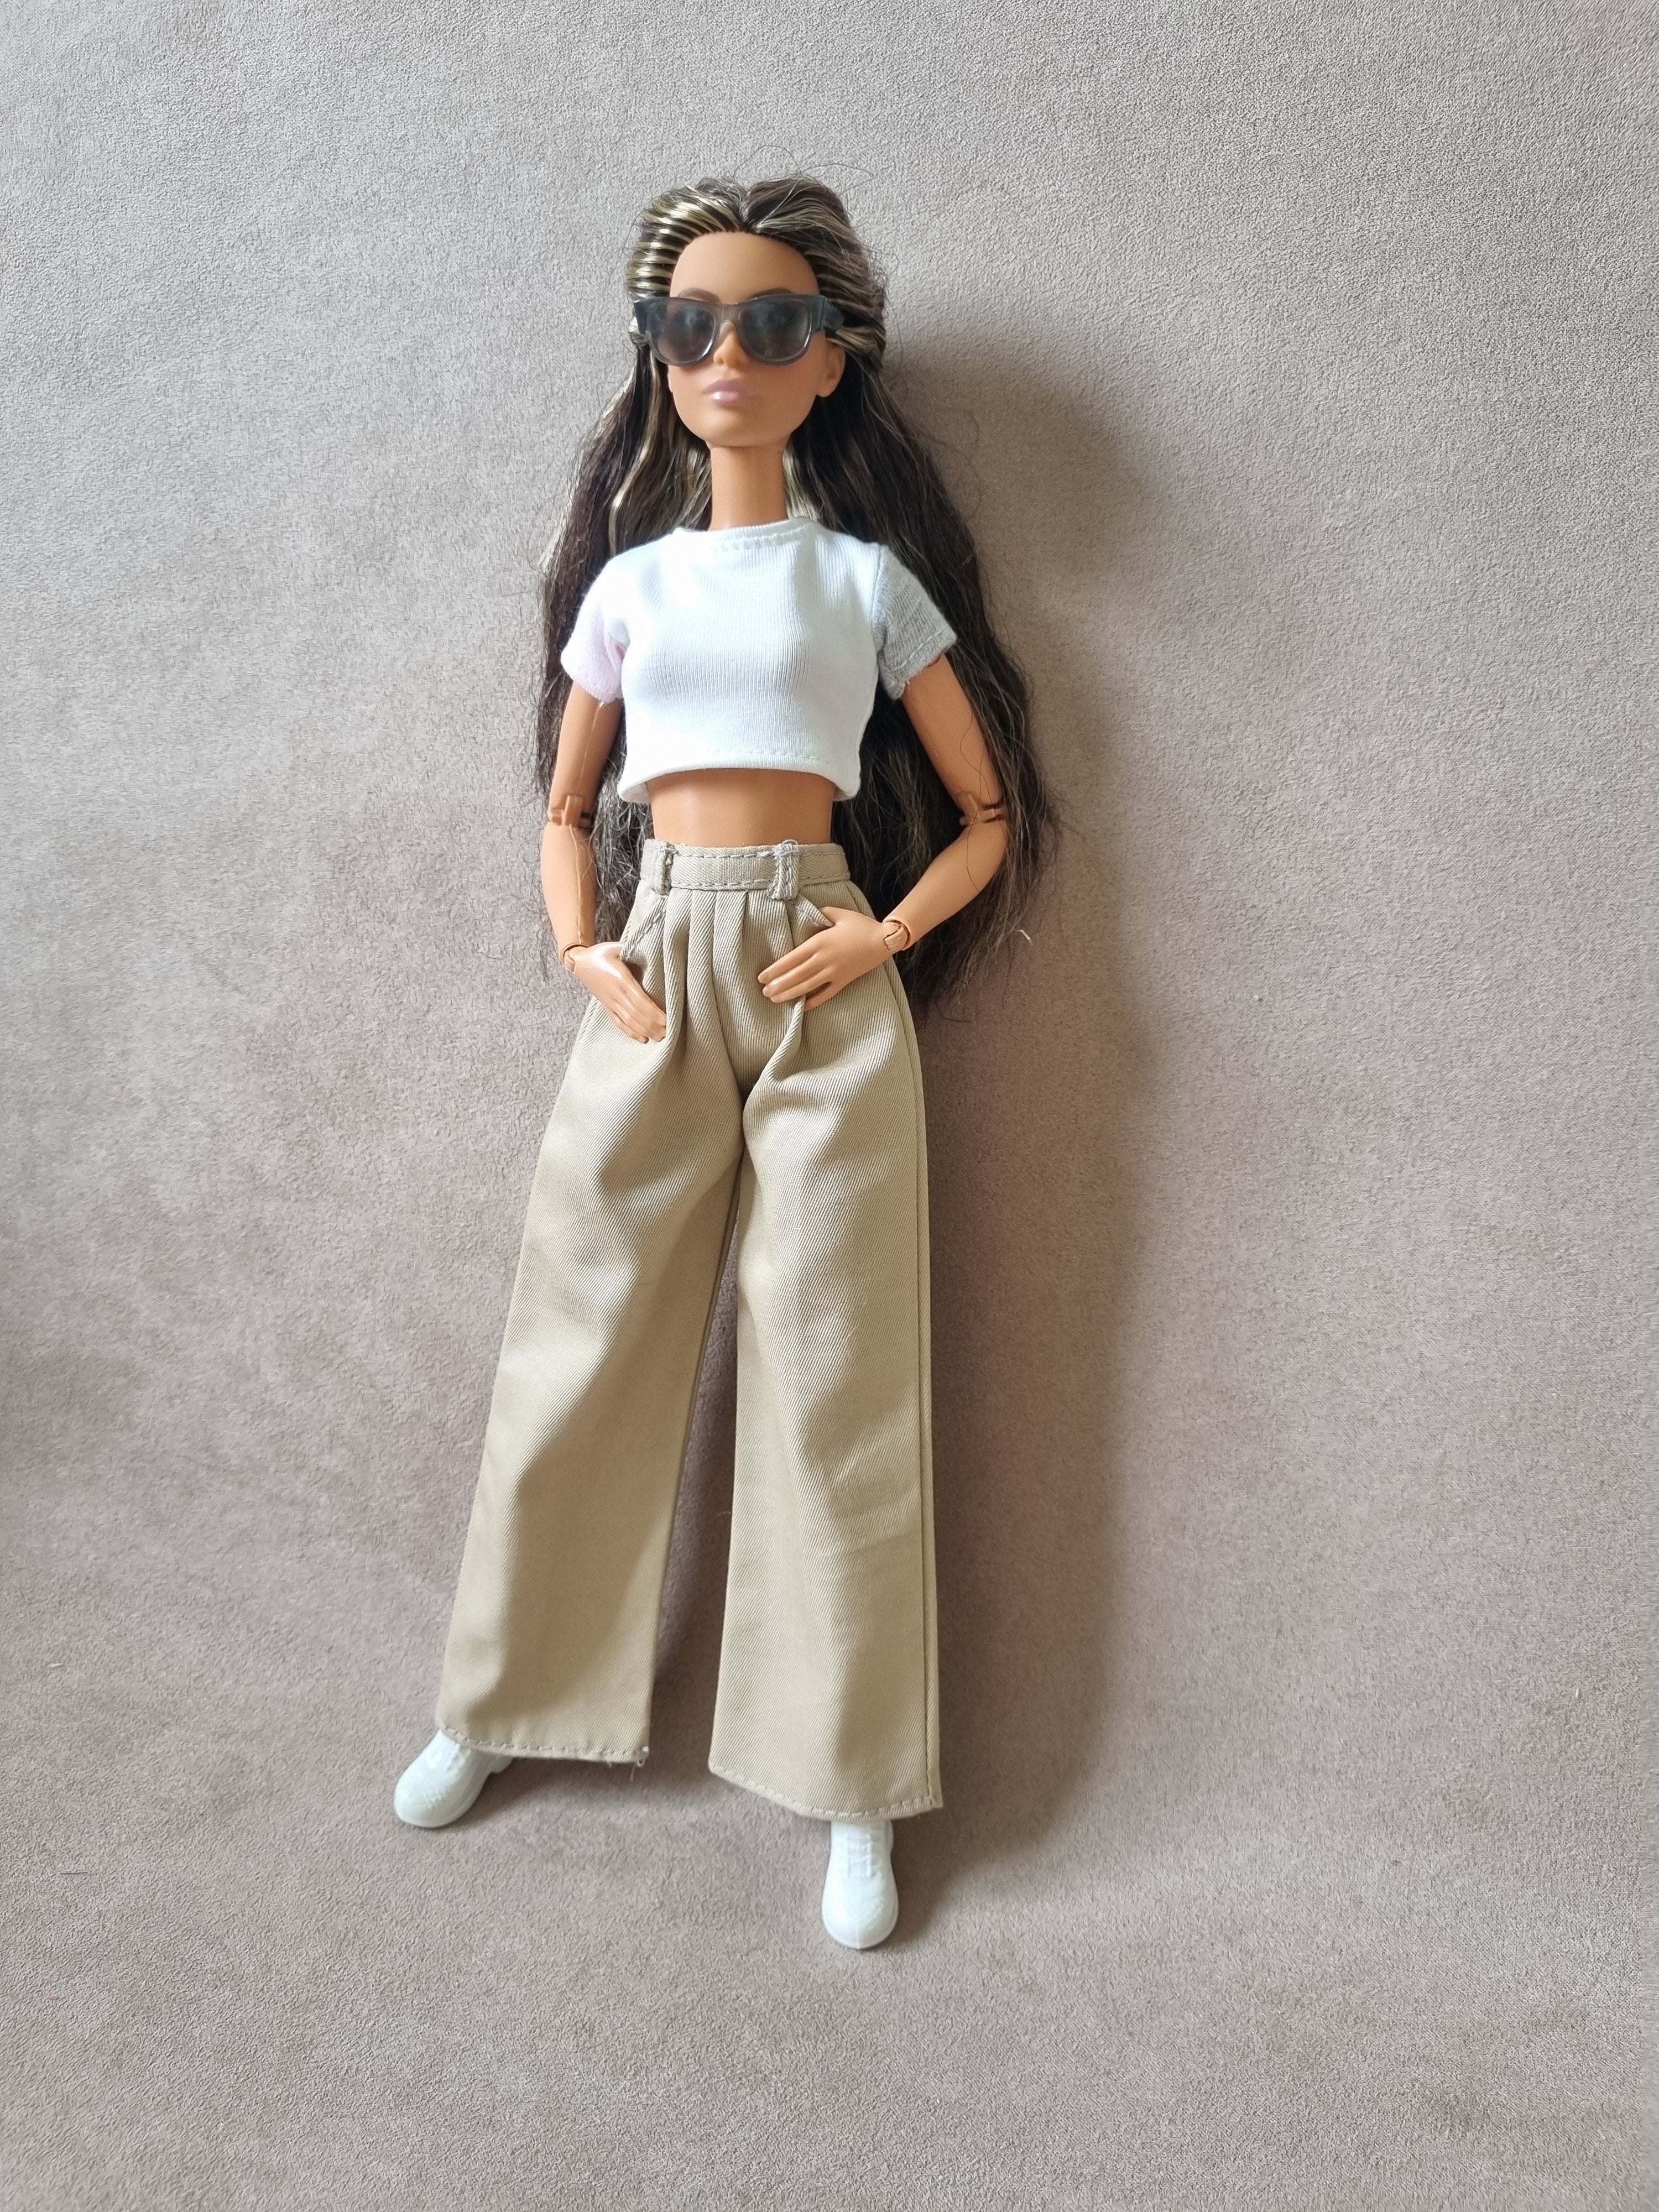 White shirt and Pants for Barbie doll – Huonghandmadedoll